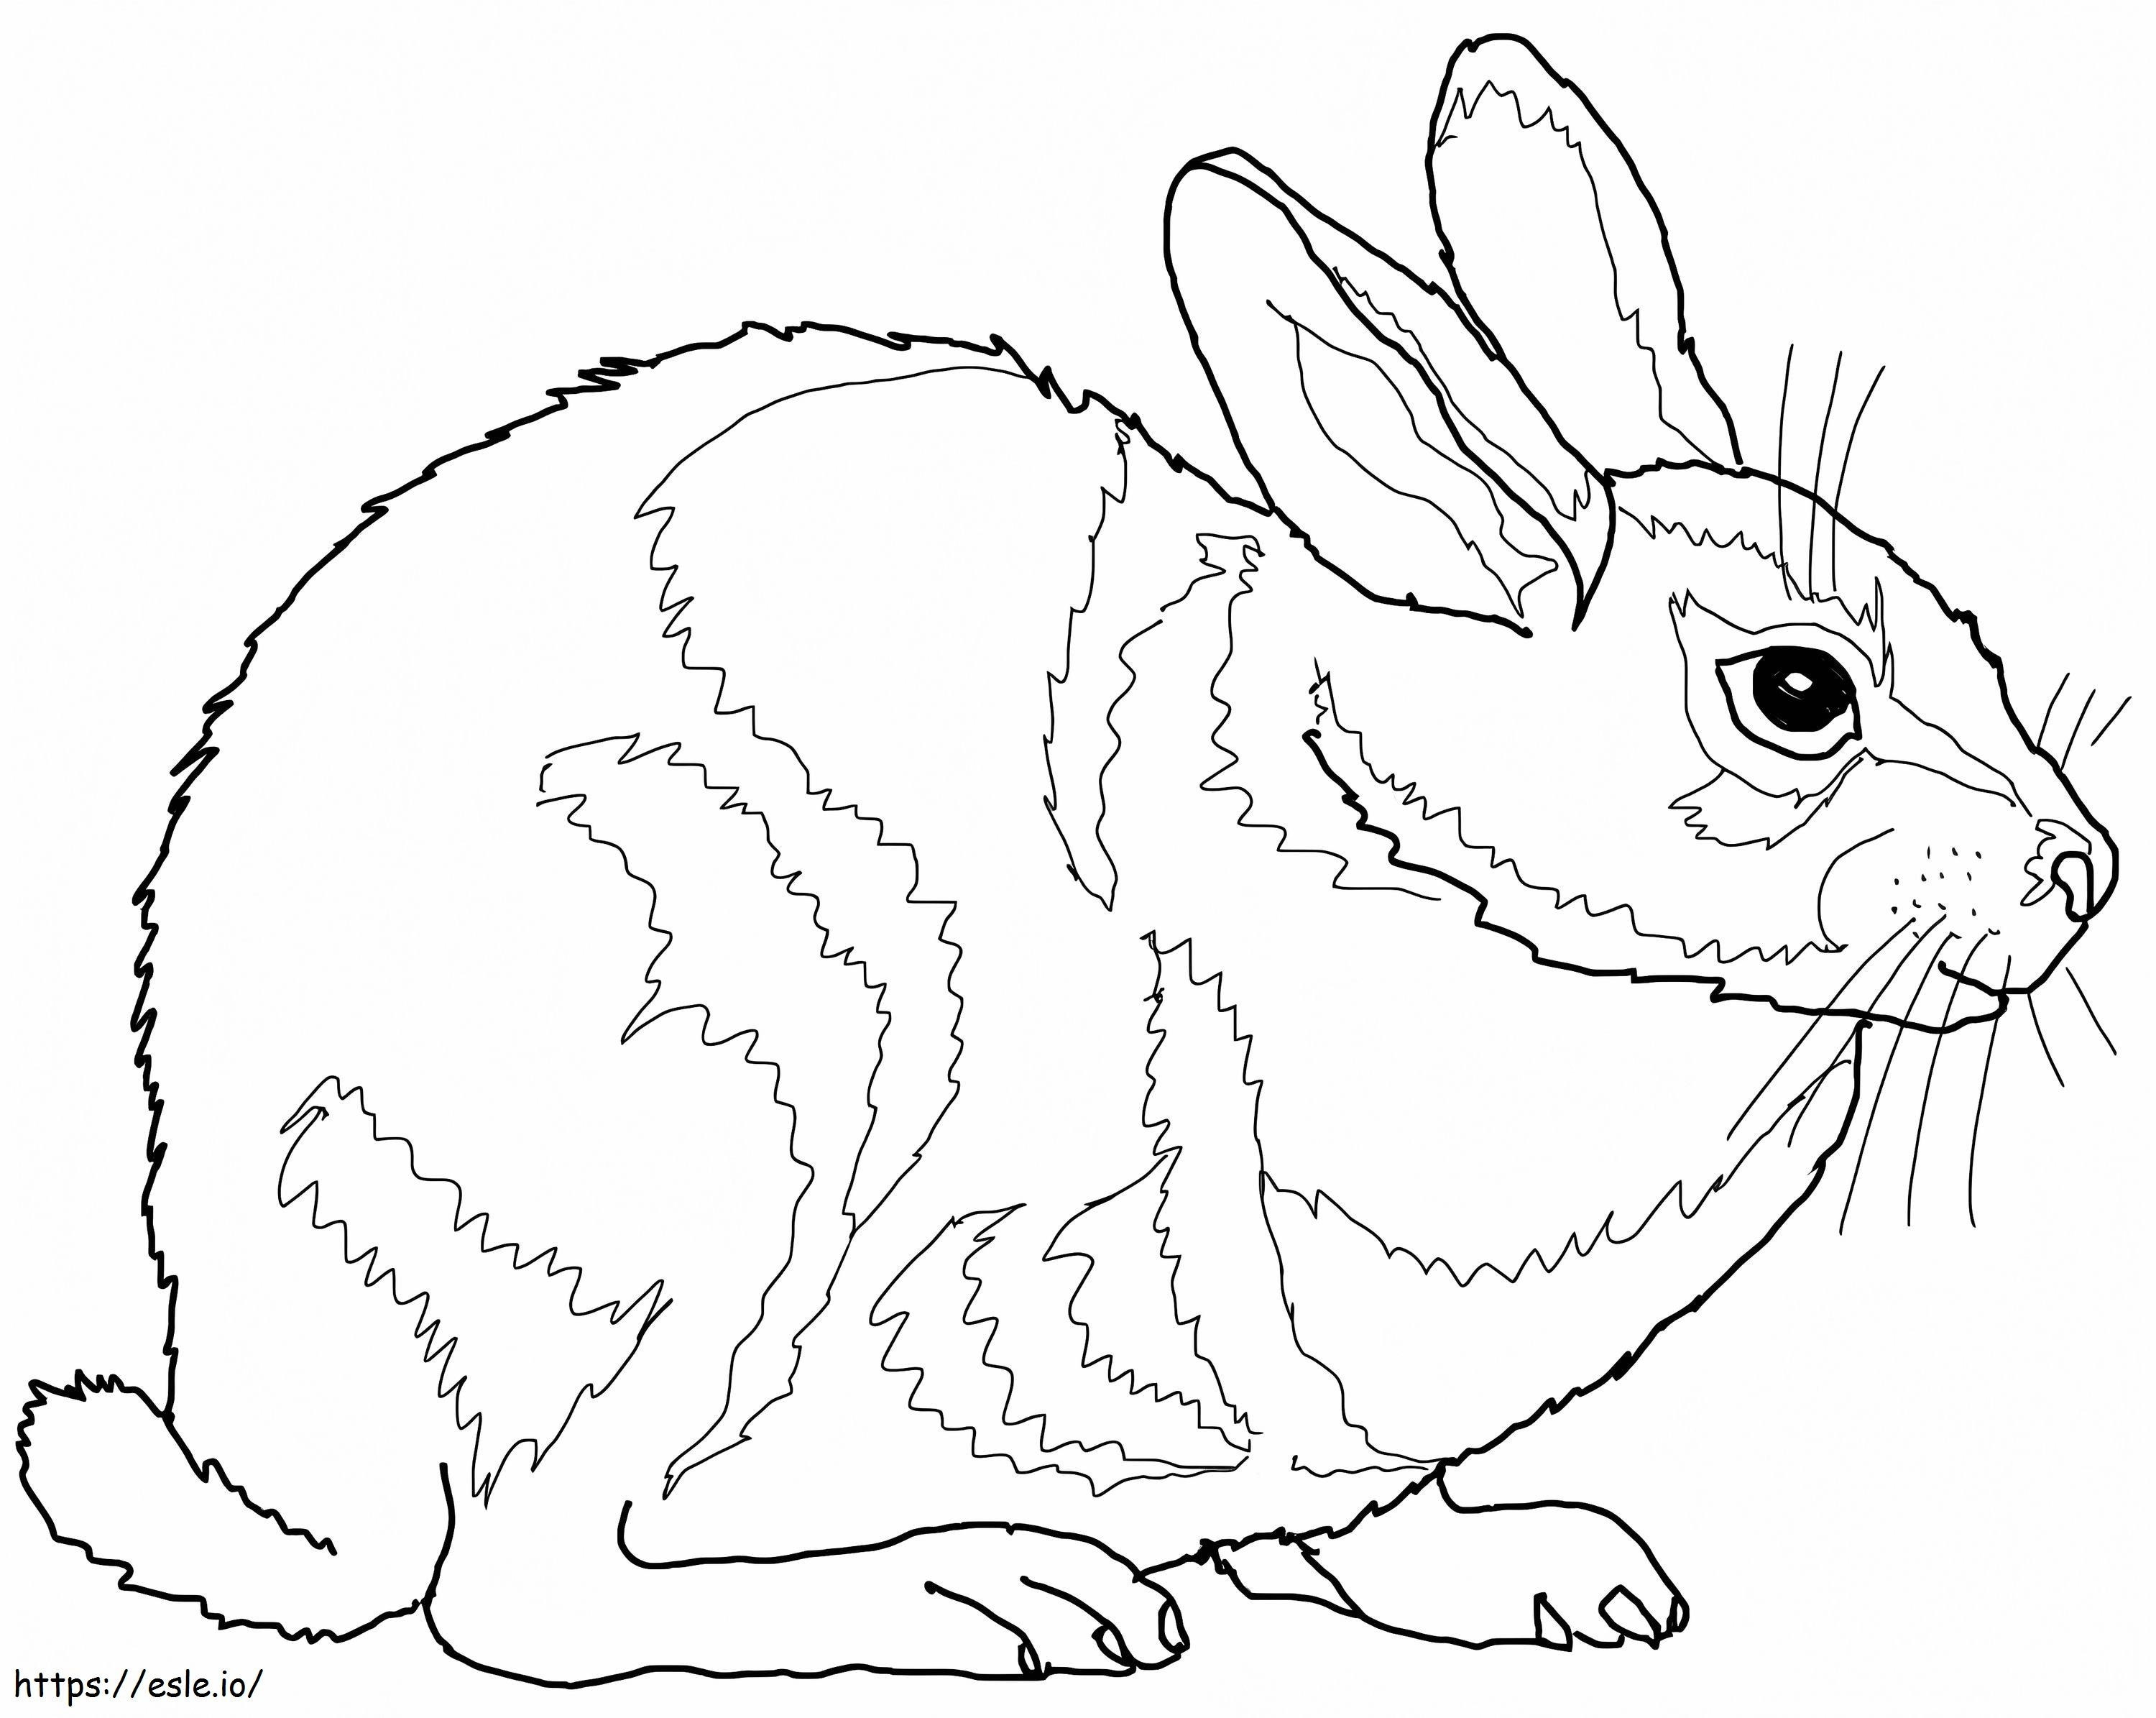 coelho coelho para colorir